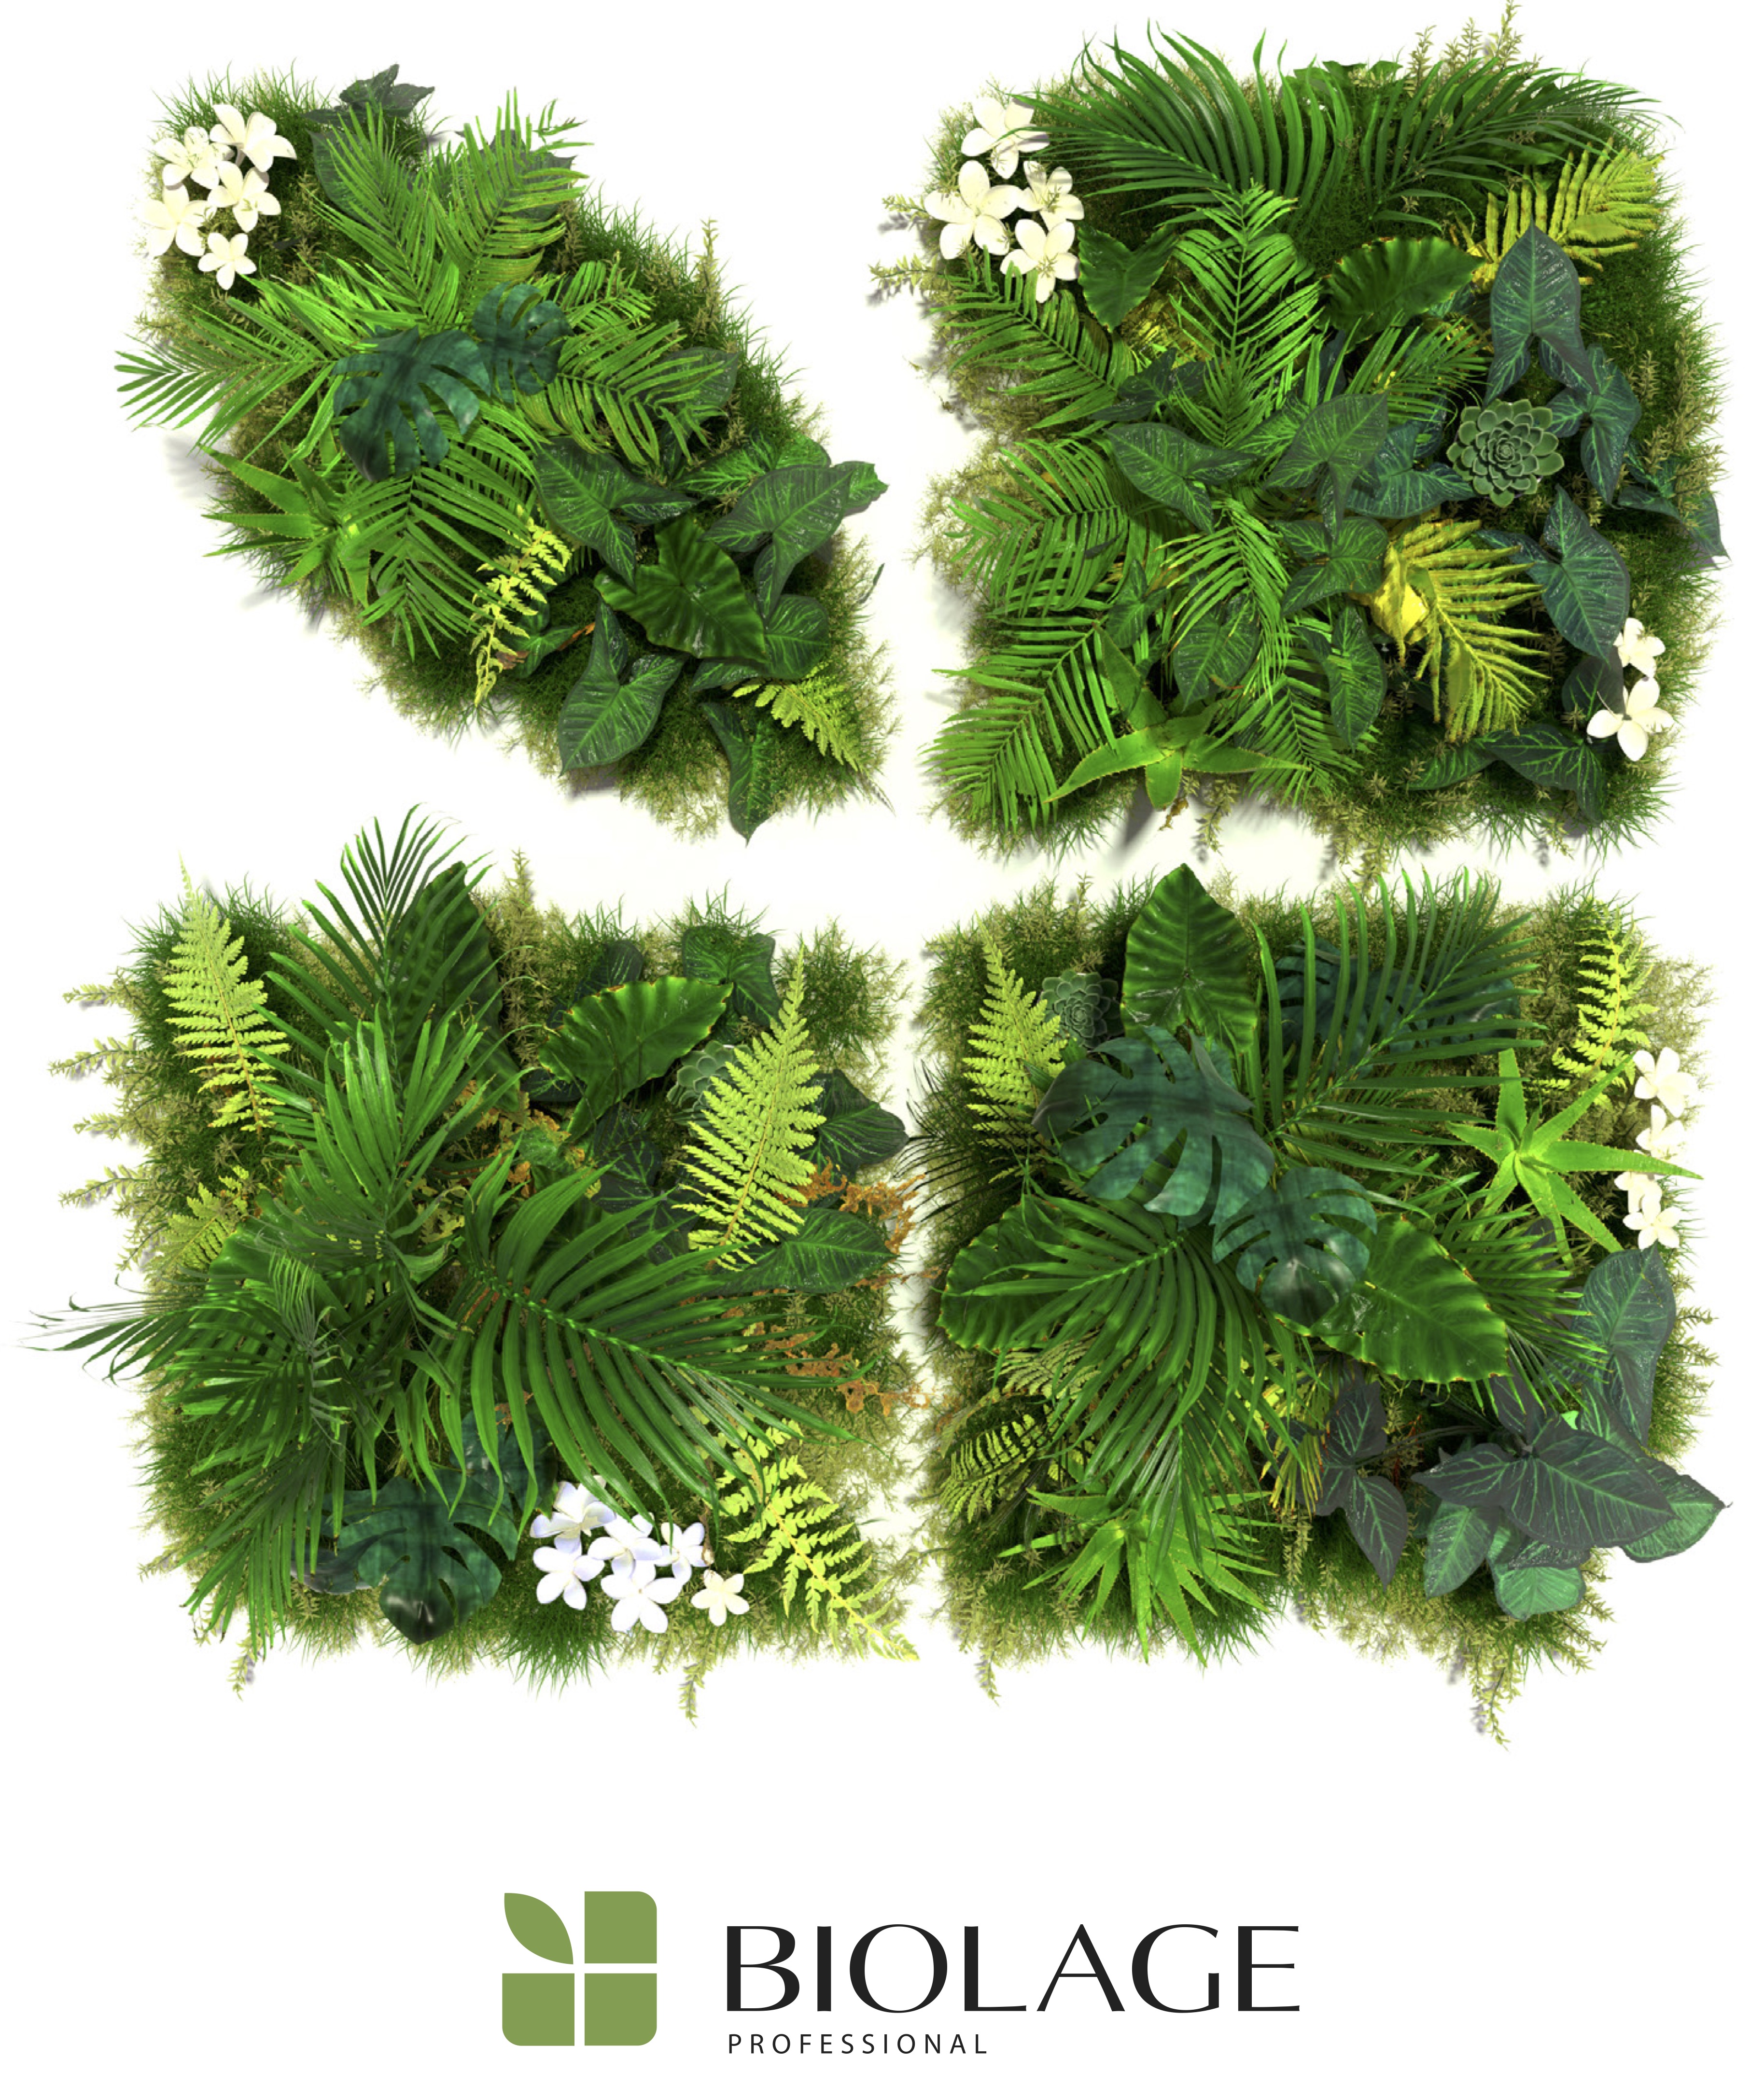 Biolage nature logo